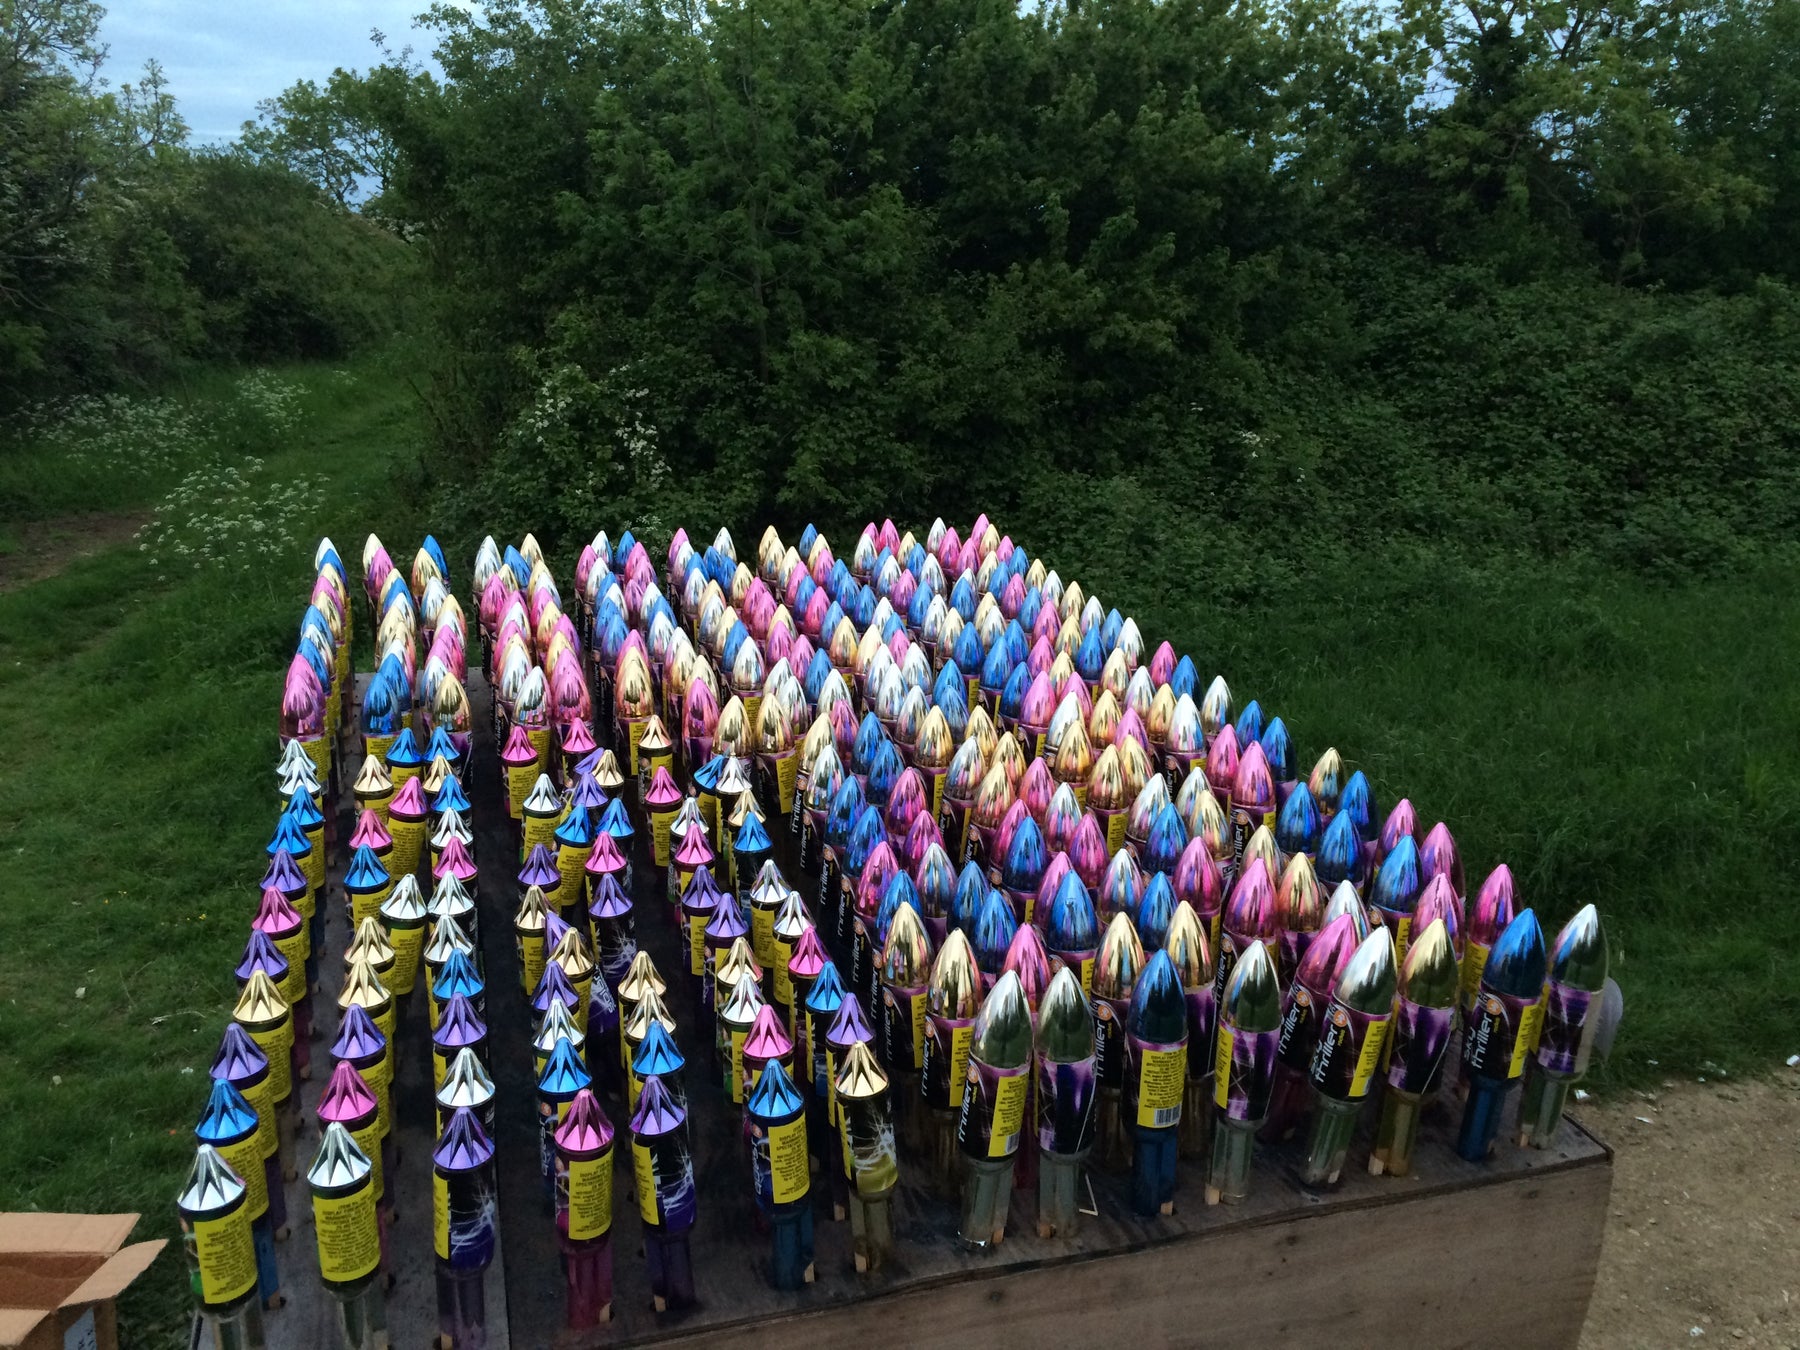 Fireworks record attempt 55,000 rockets